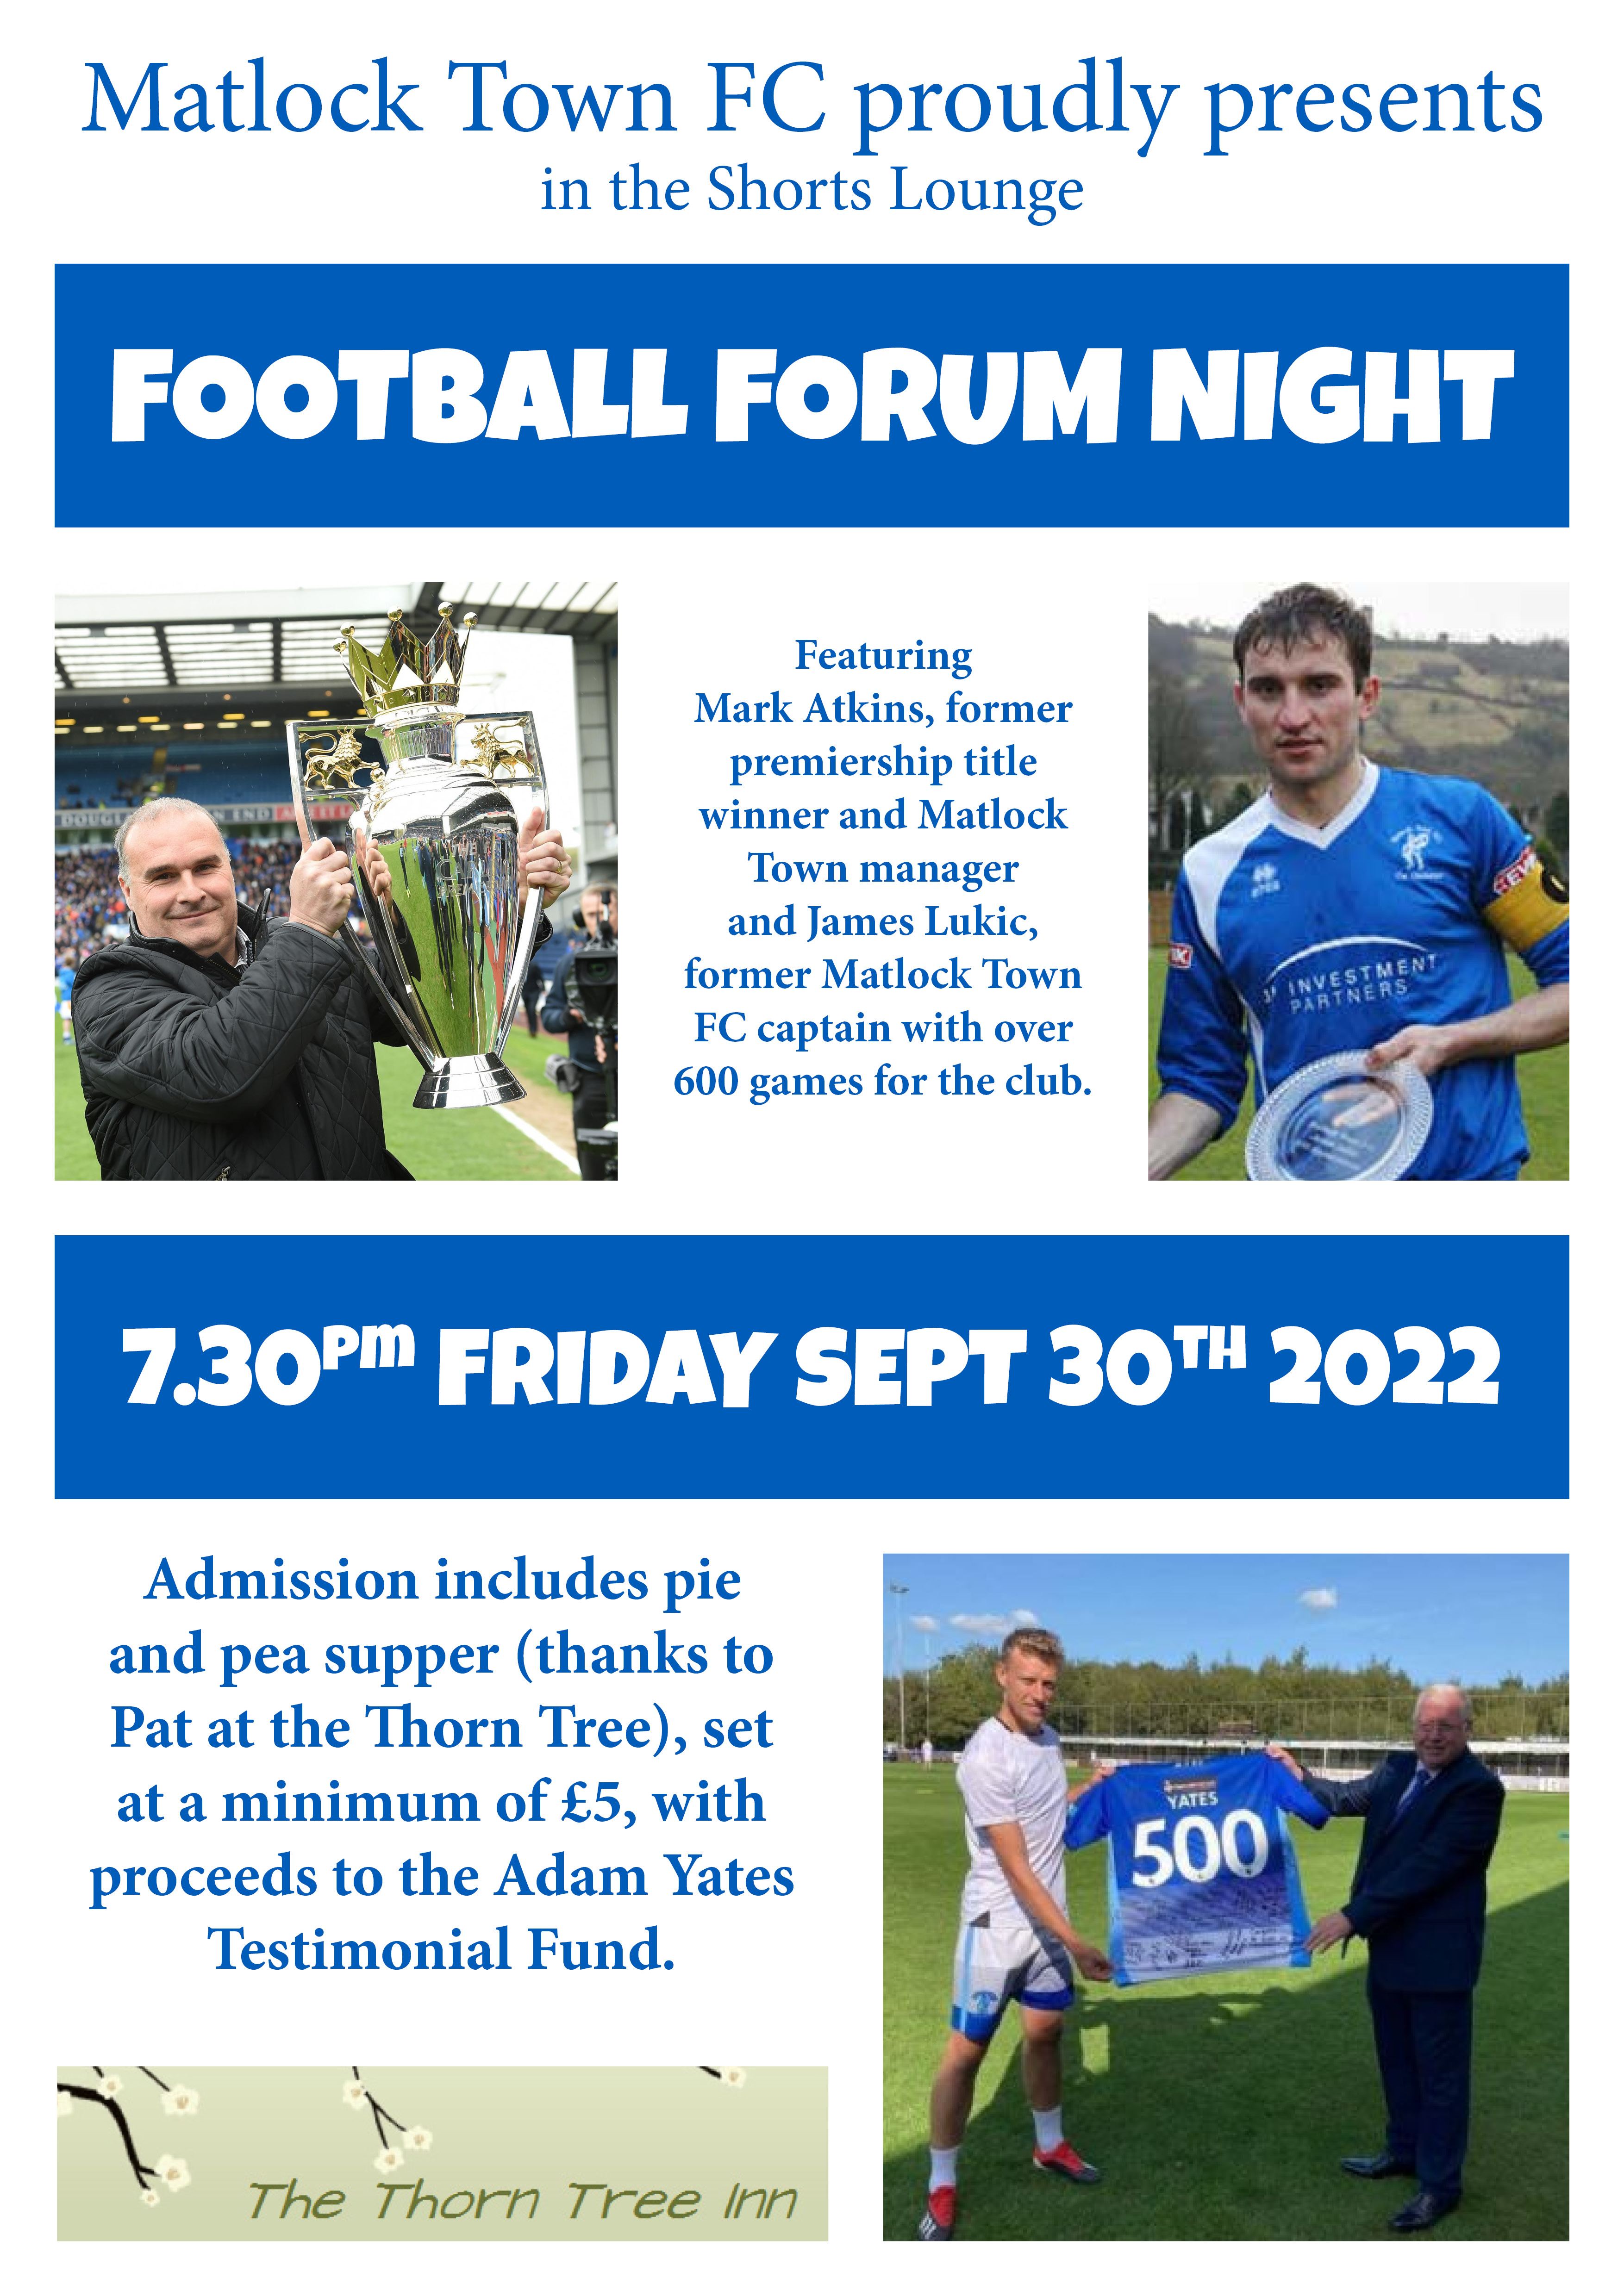 MTFC PRESENTS | Football Forum Night for Yates testimonial